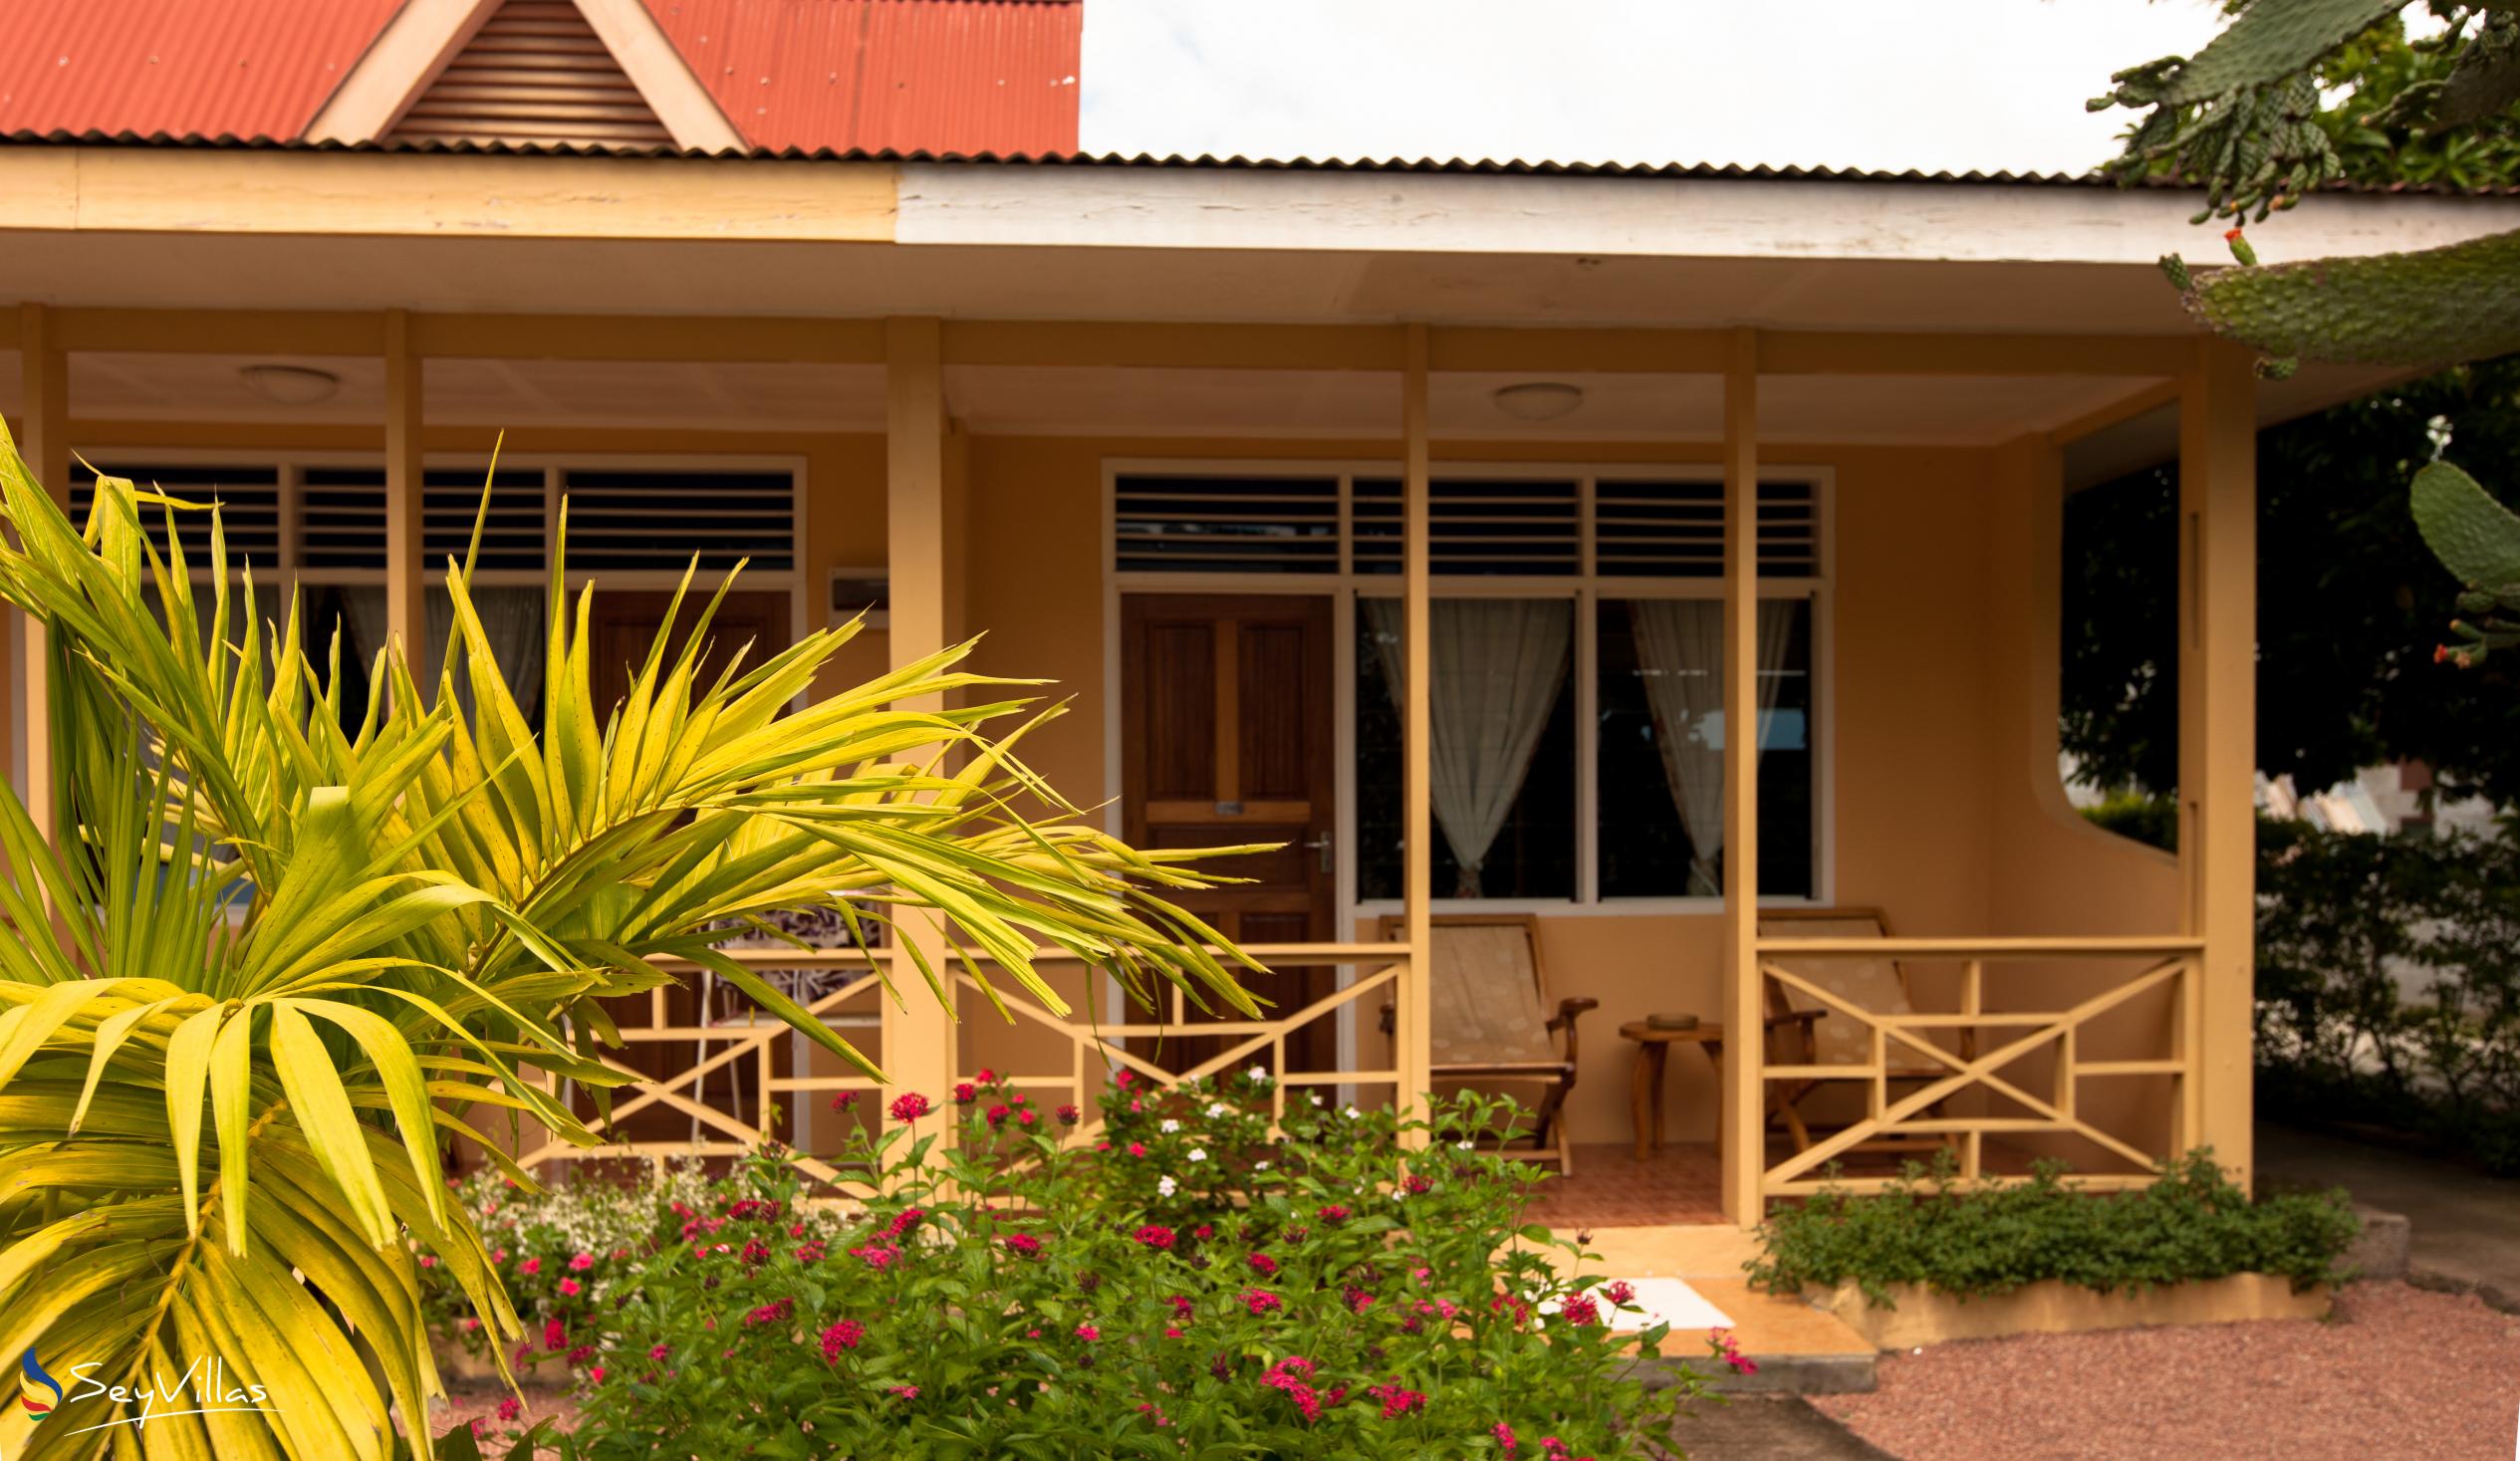 Photo 6: Chez Marston - Outdoor area - La Digue (Seychelles)